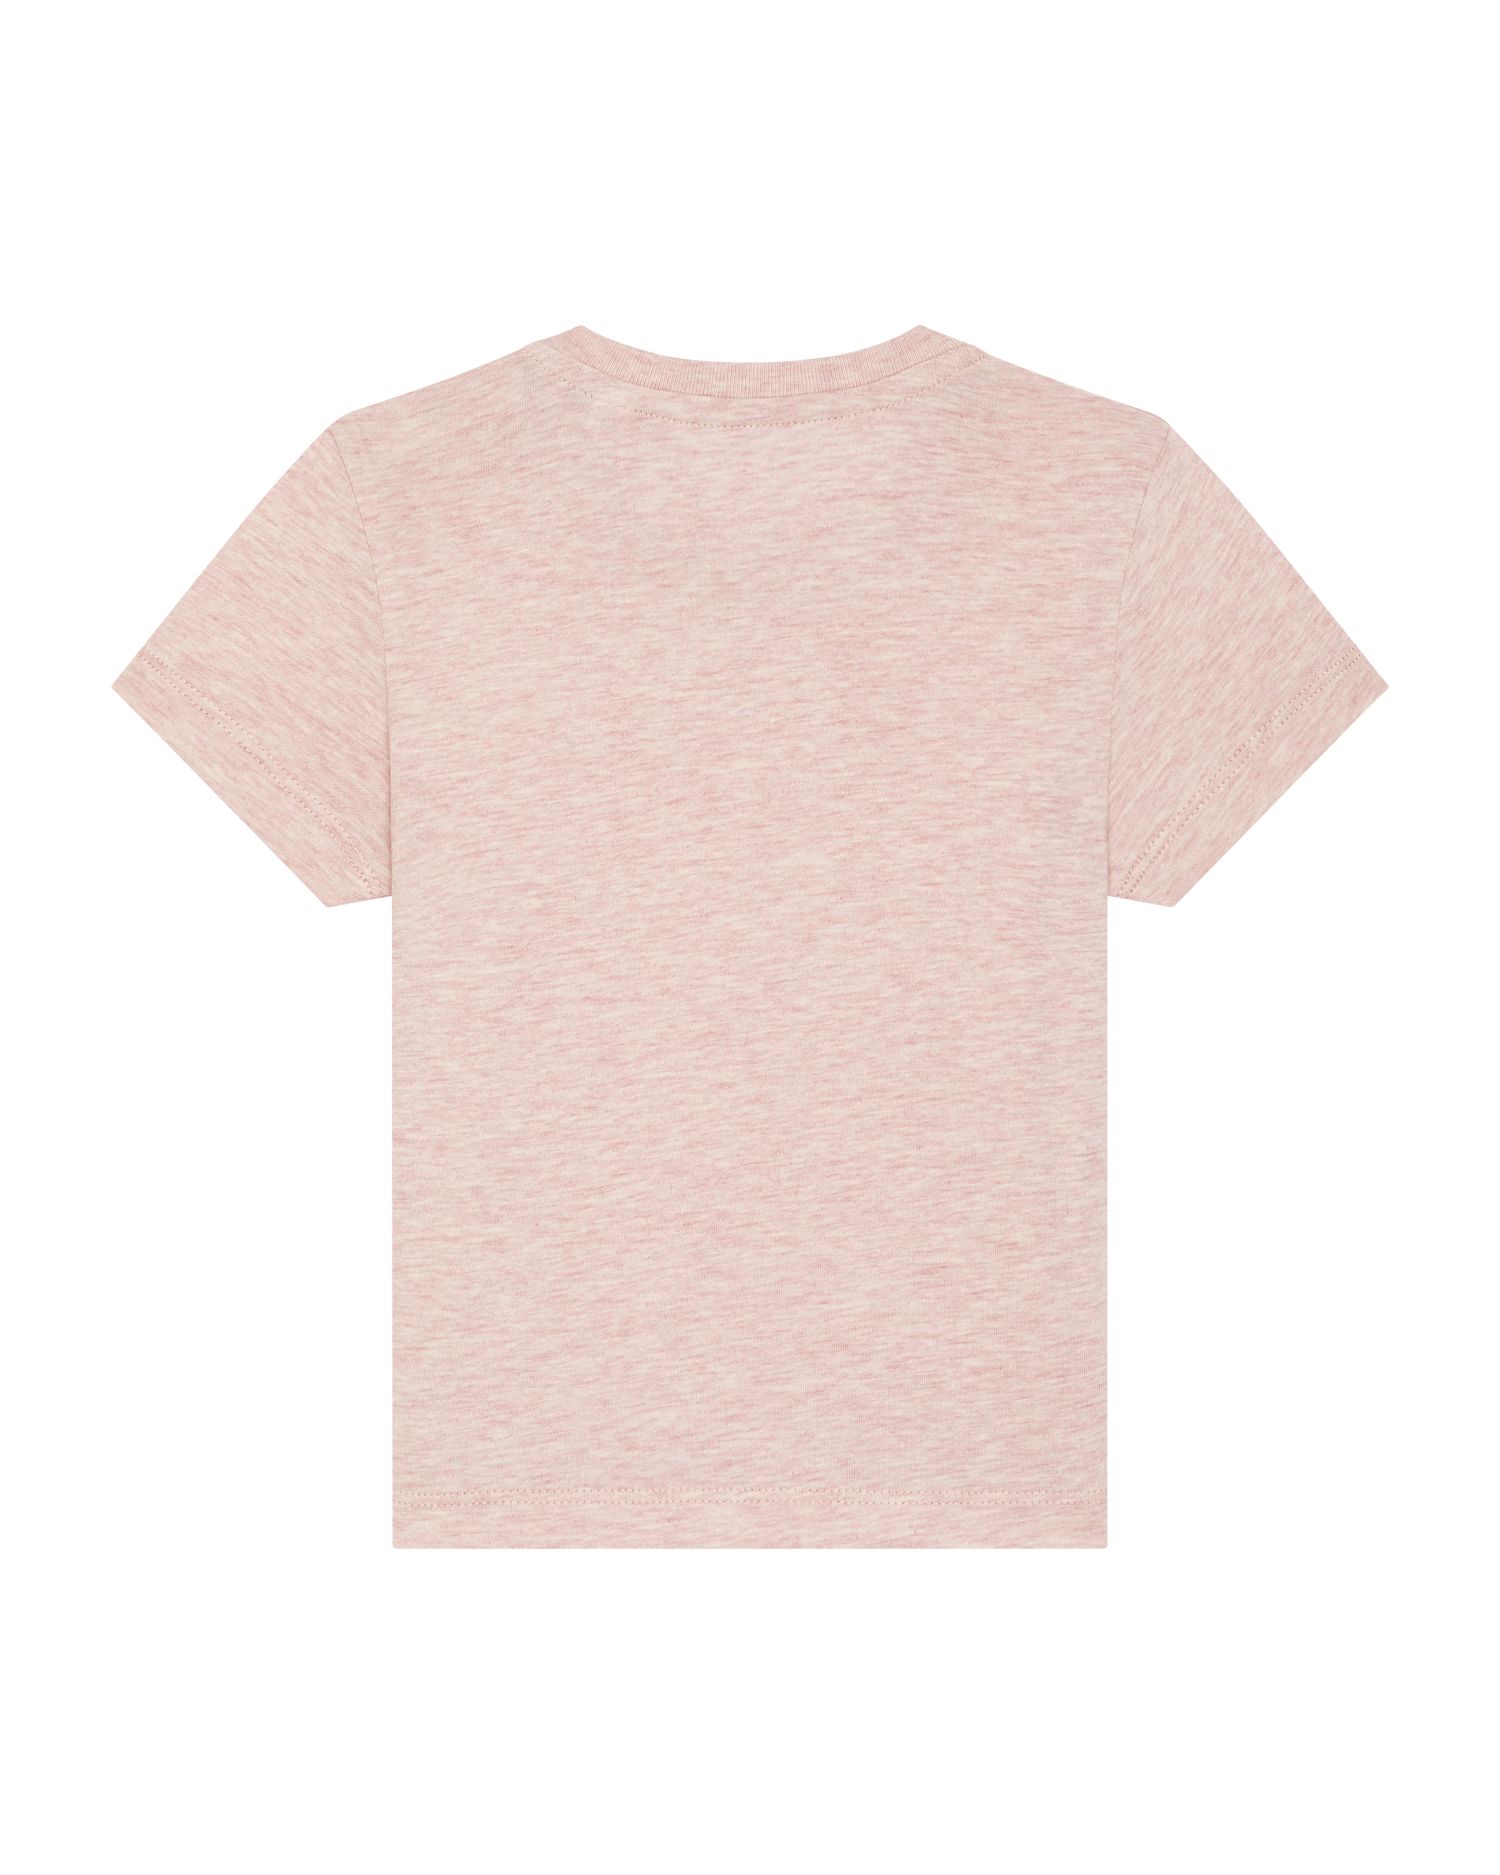 T-Shirt Baby Creator in Farbe Cream Heather Pink